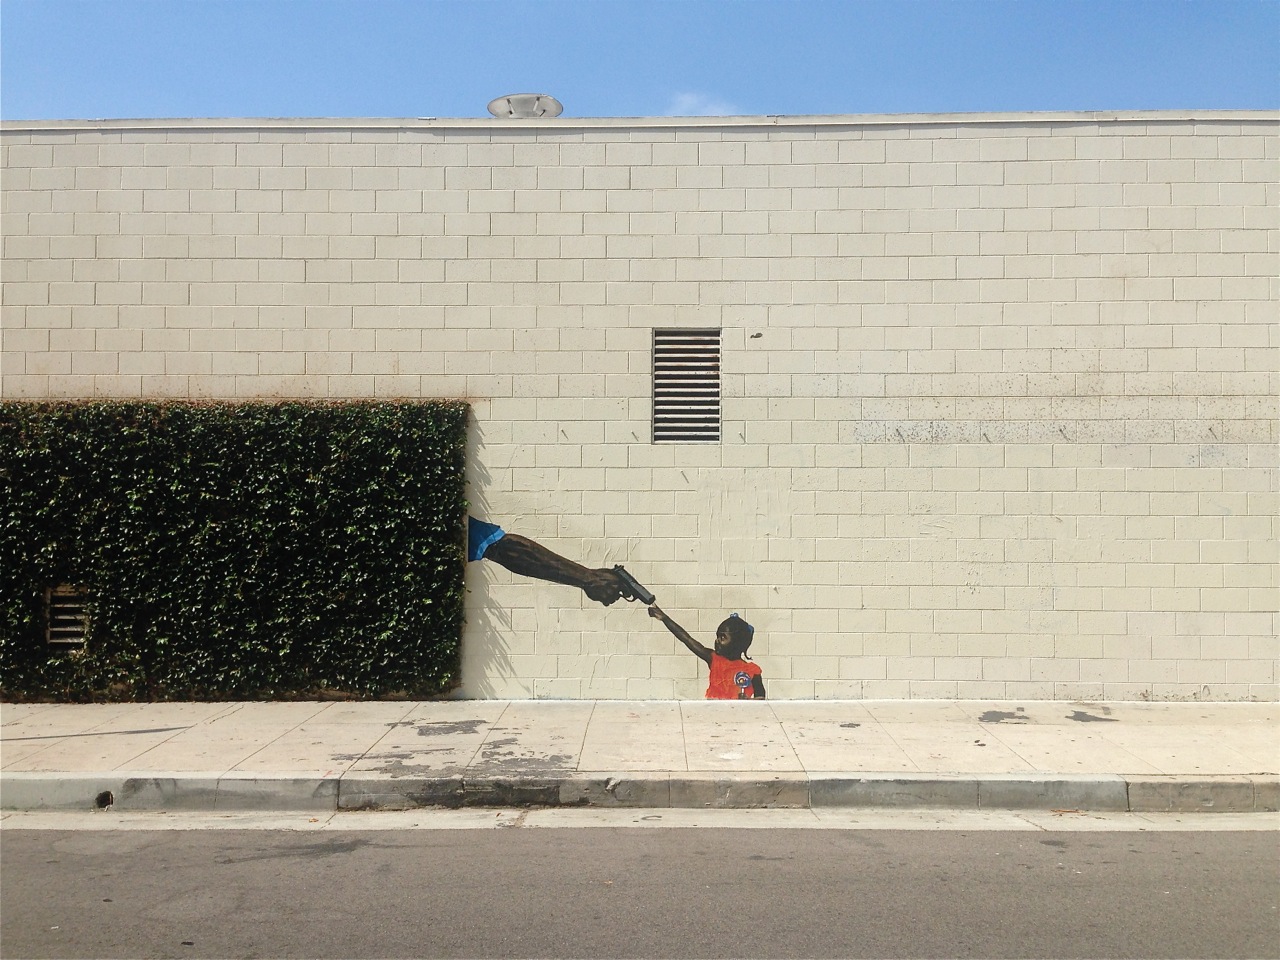 Killyrslf in Los Angeles. Photo by The Graffiti Hunter (via LA Taco).